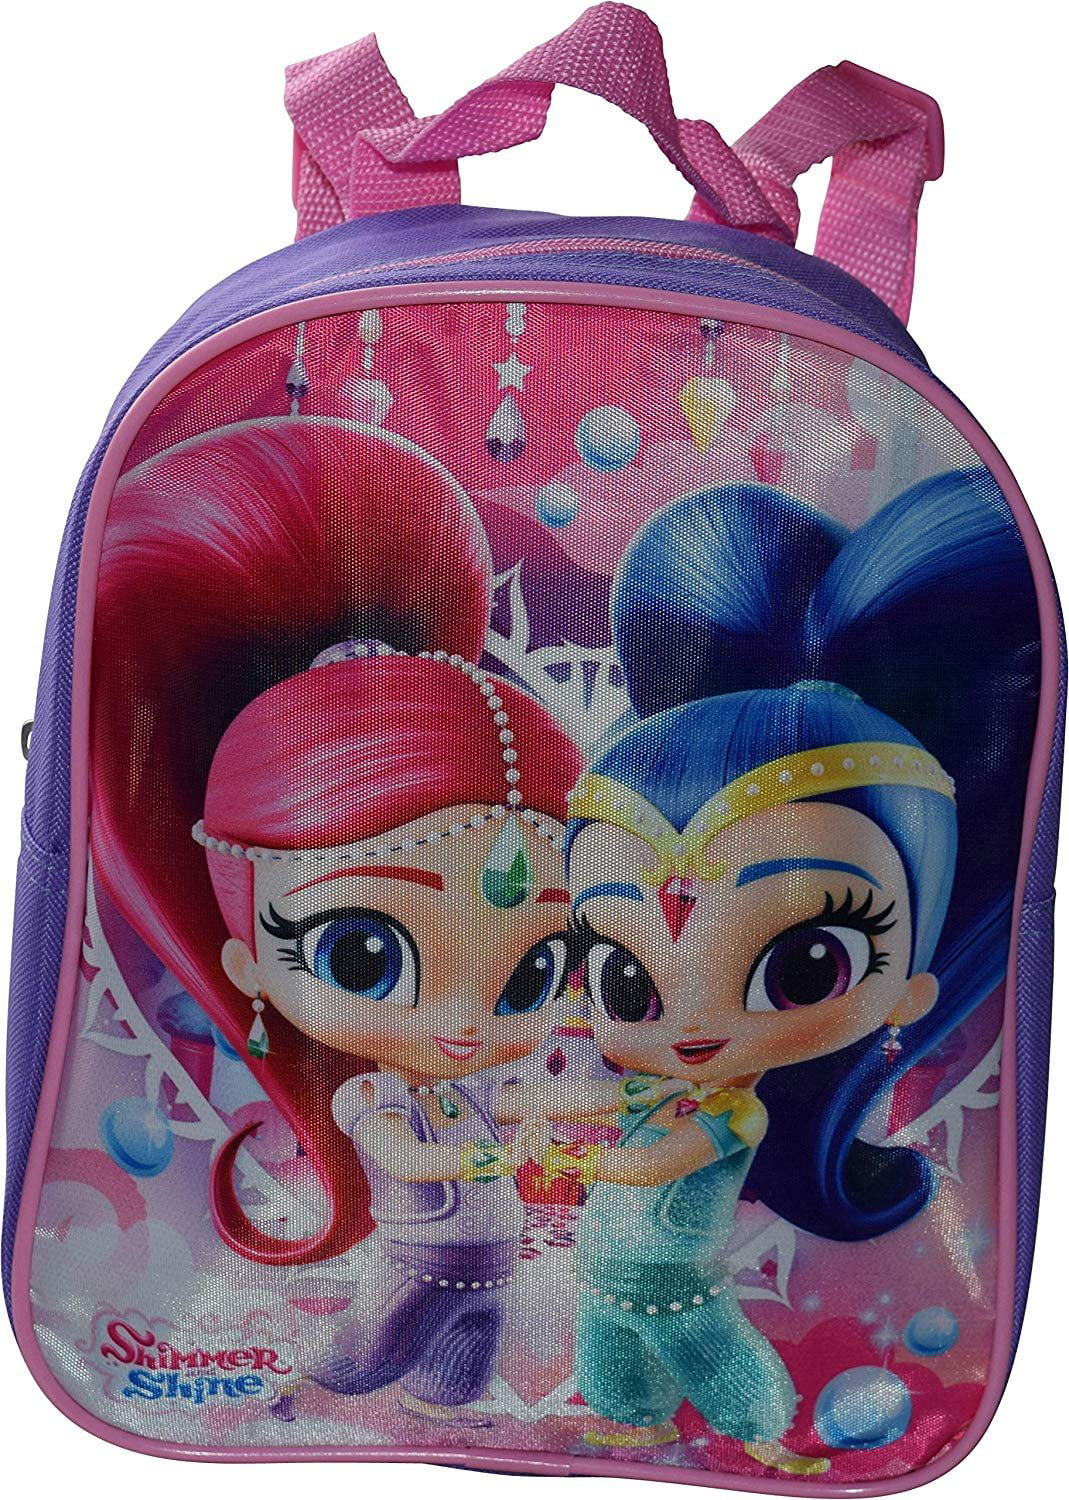 Nickelodeon Shimmer and Shine Girl's 10" Mini Backpack 